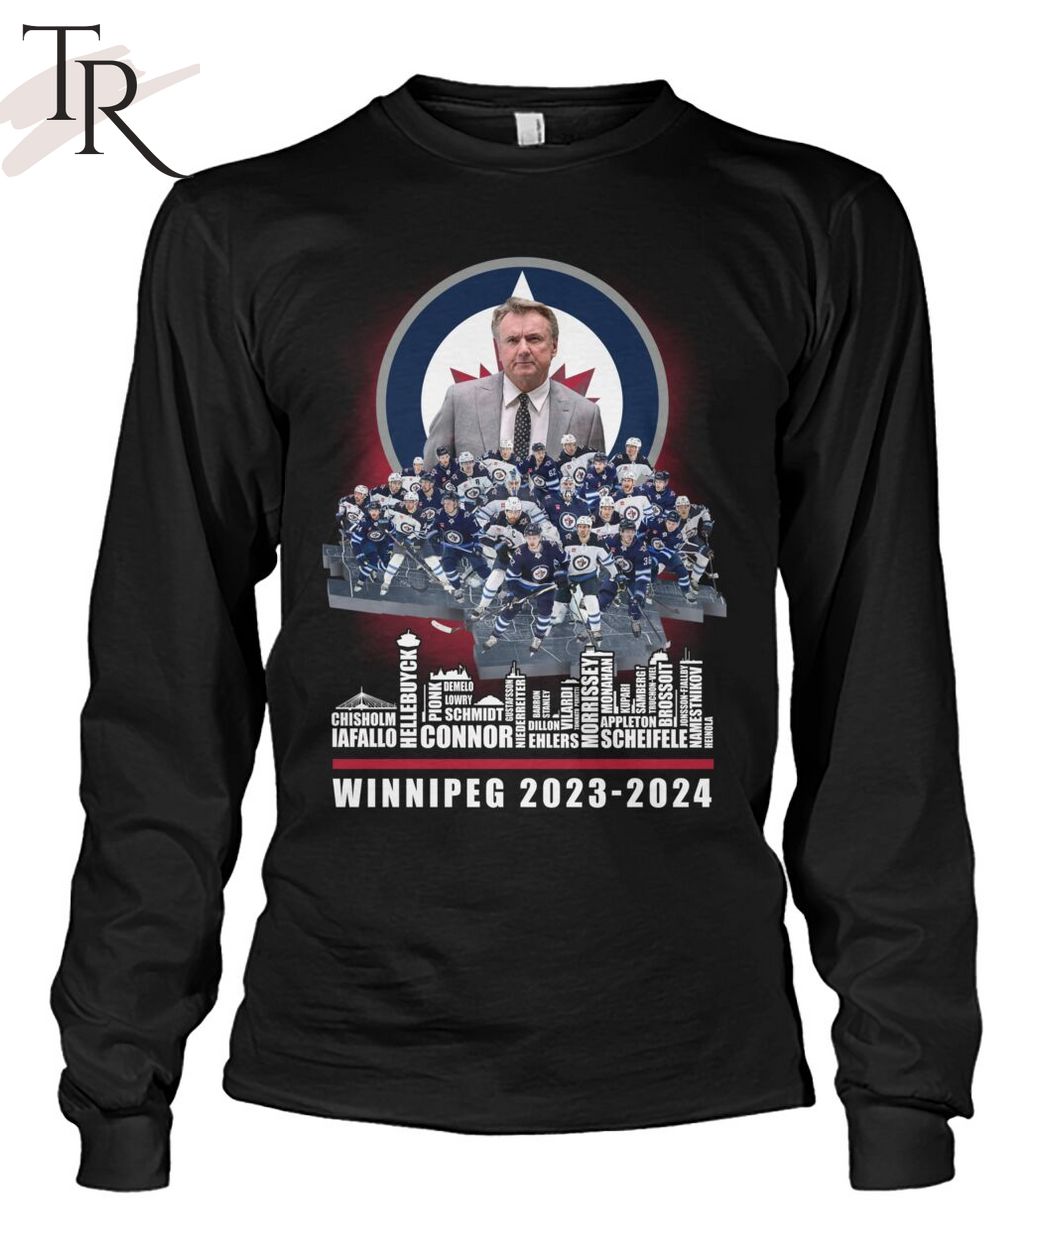 Vancouver Canucks Winnipeg 2023-2024 T-Shirt